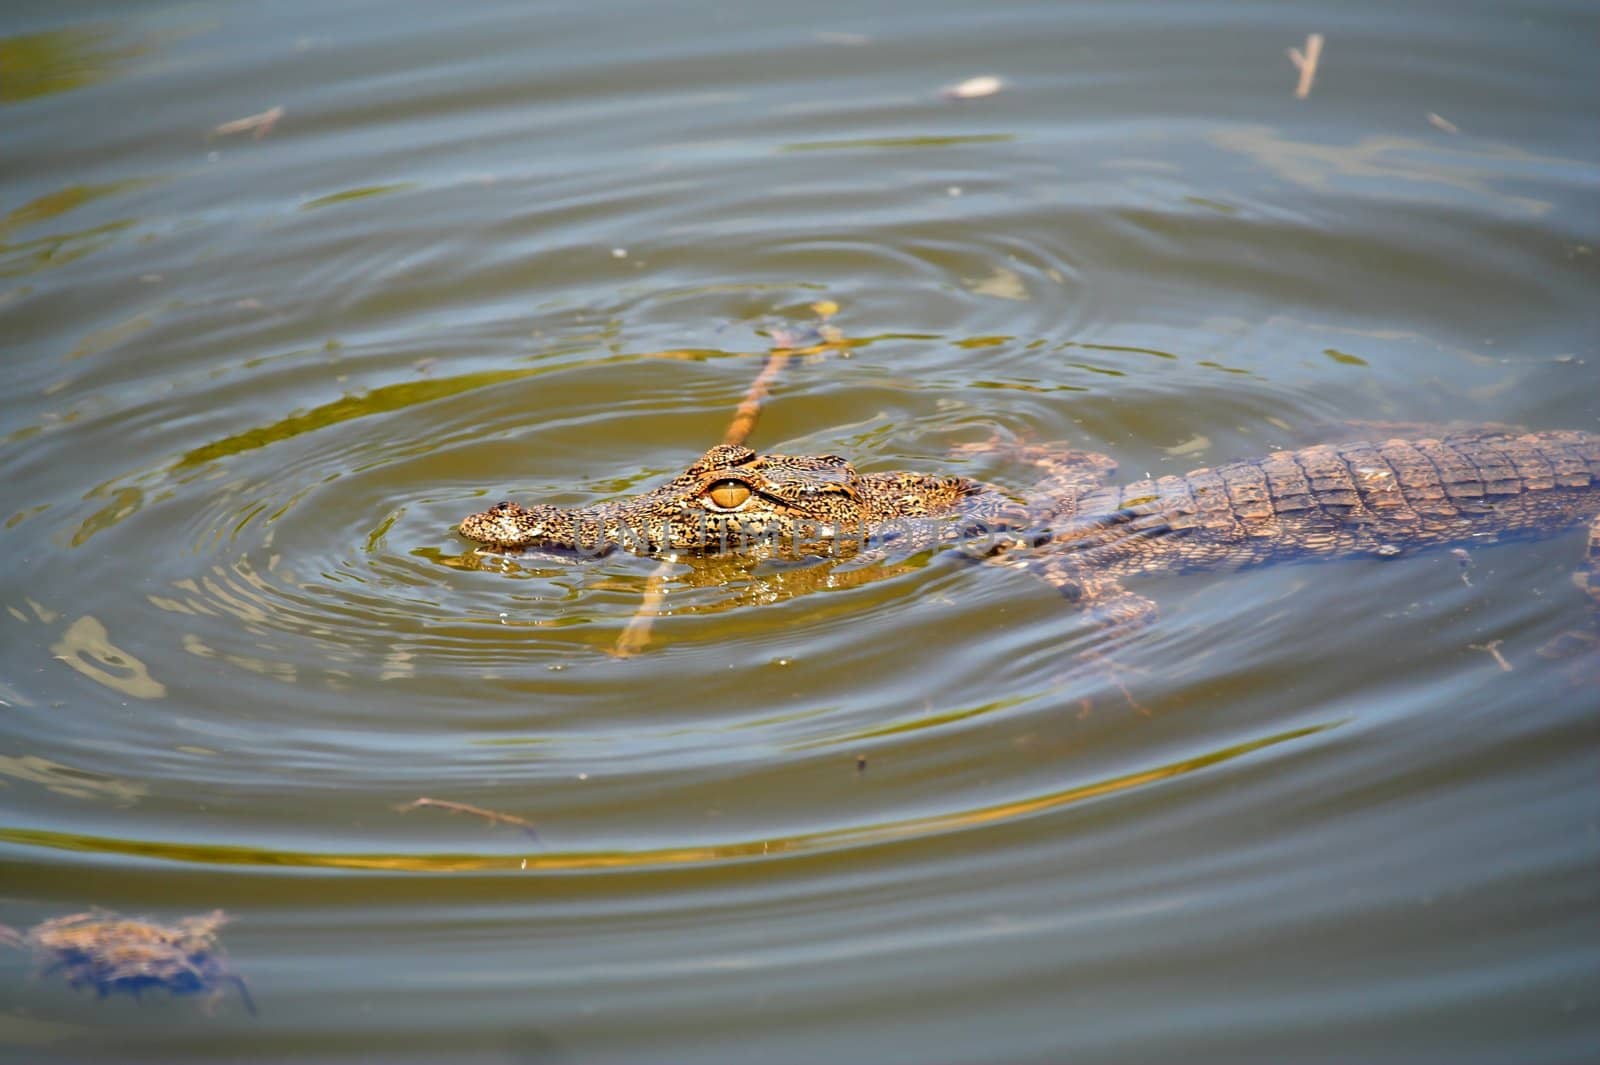 Baby Crocodile attacking a floating stick by nightowlza